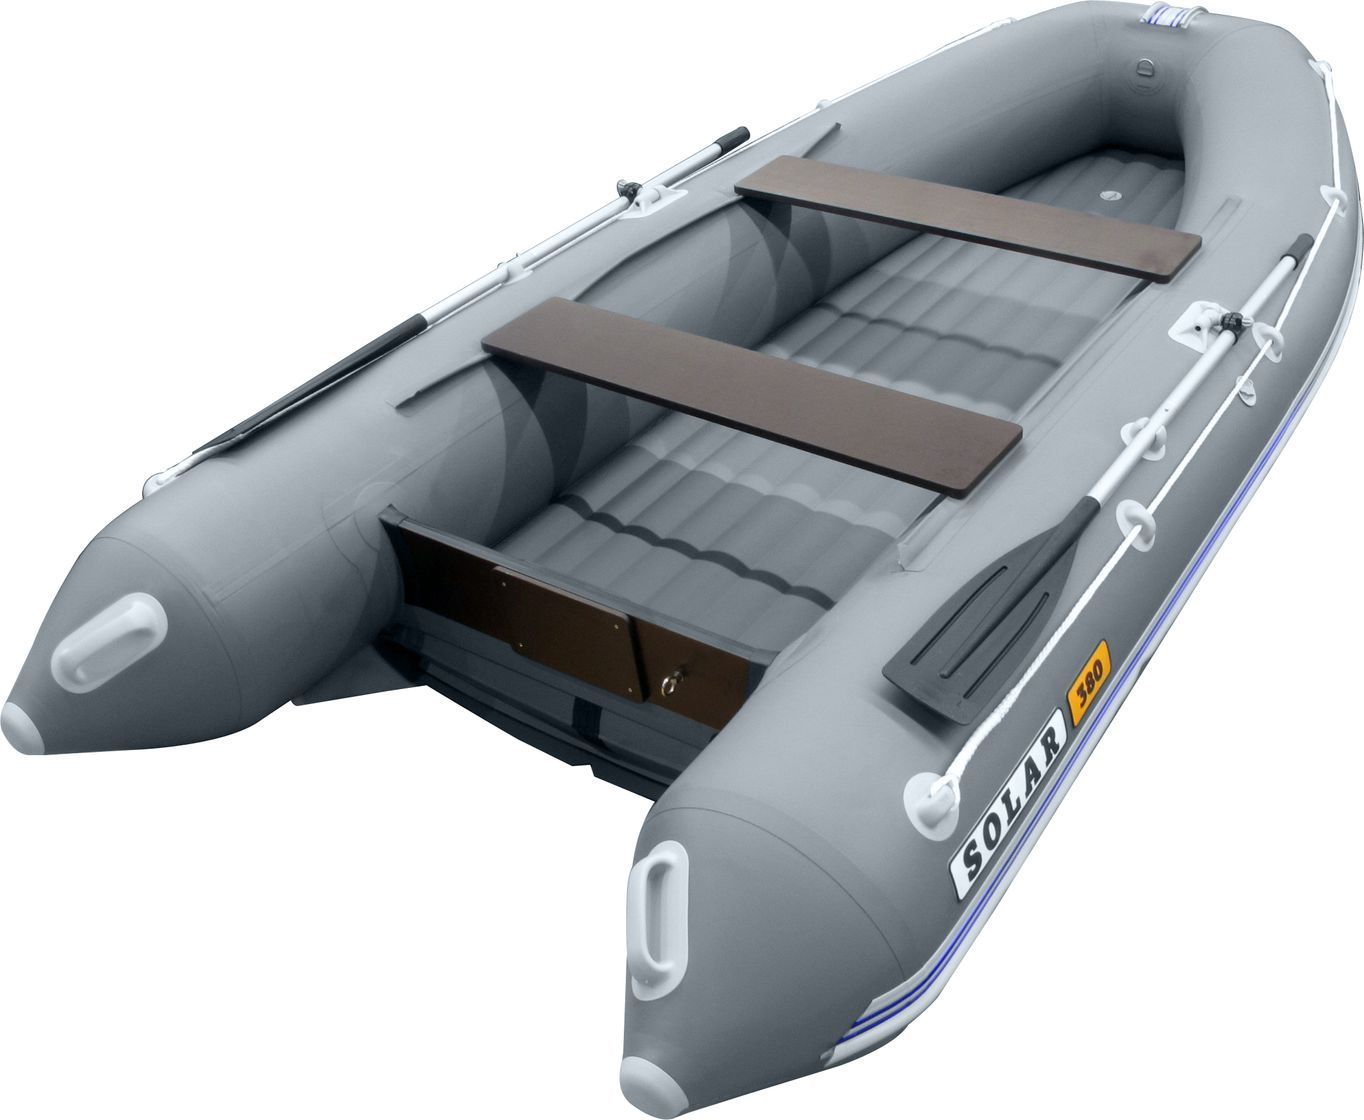 Надувная лодка ПВХ SOLAR-330 К (Оптима), серый SLR330k_opt_grey надувная лодка пвх solar 350 к максима оранжевый slr350k max orange